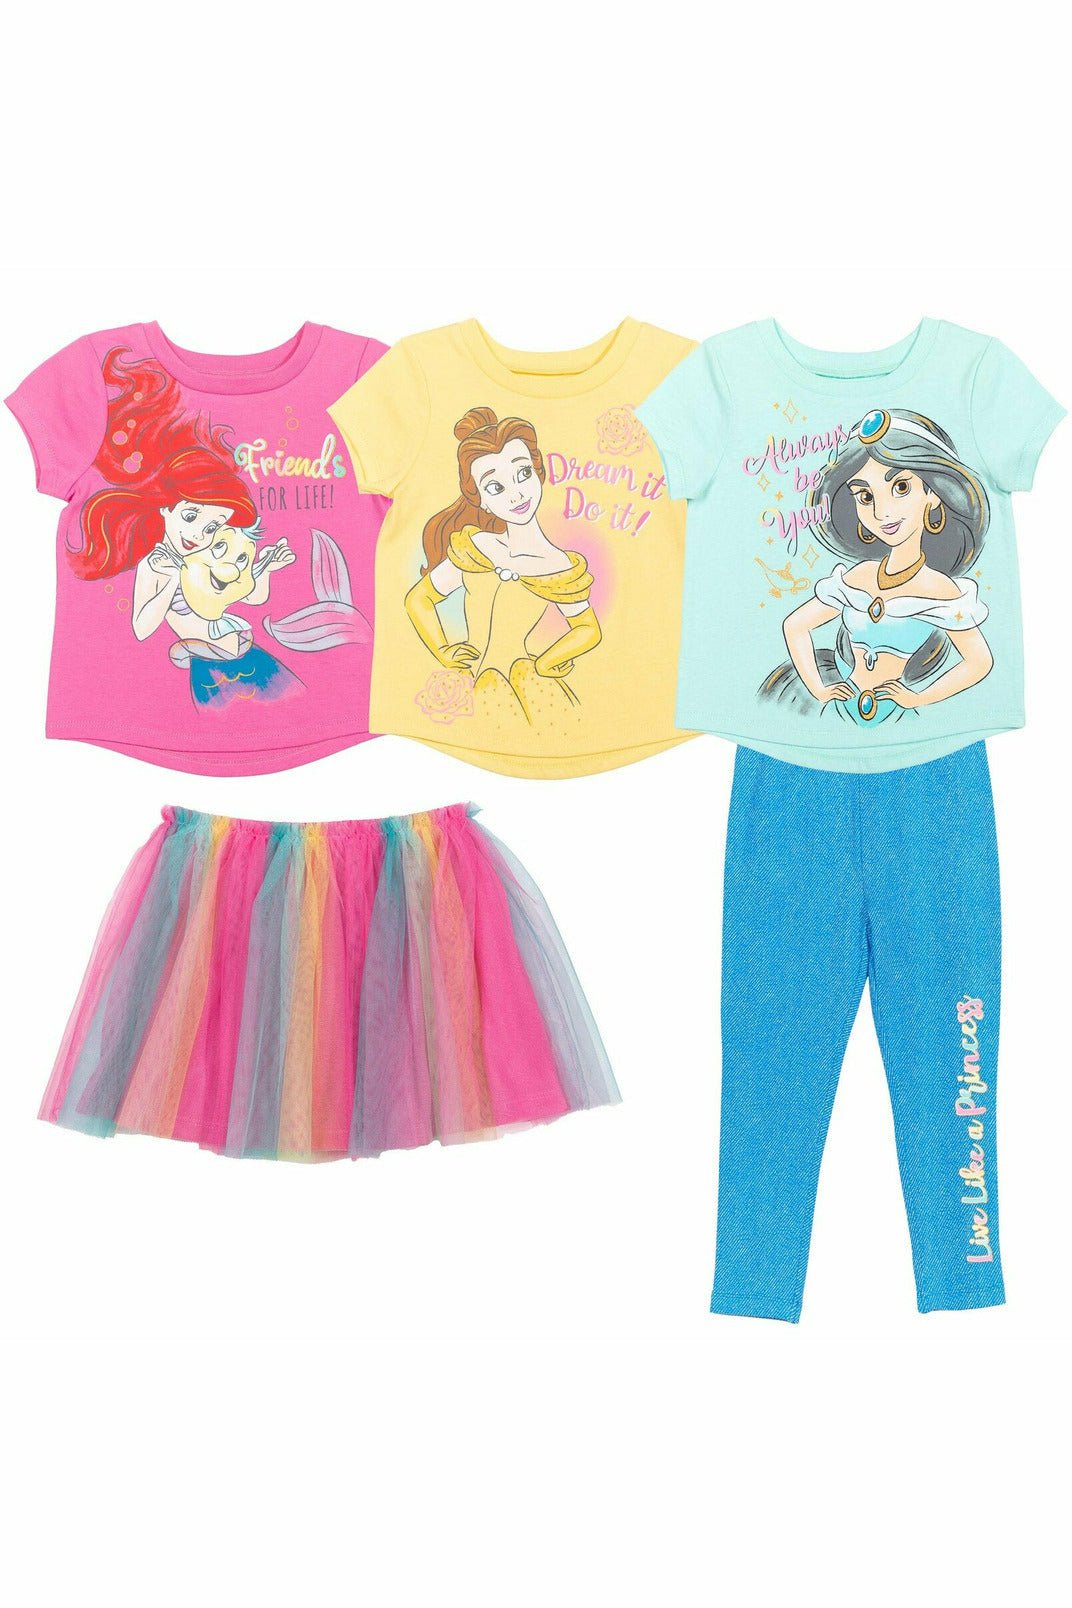 Disney Princesses 3 Piece Outfit Set: T-Shirt Legging Skirt - imagikids